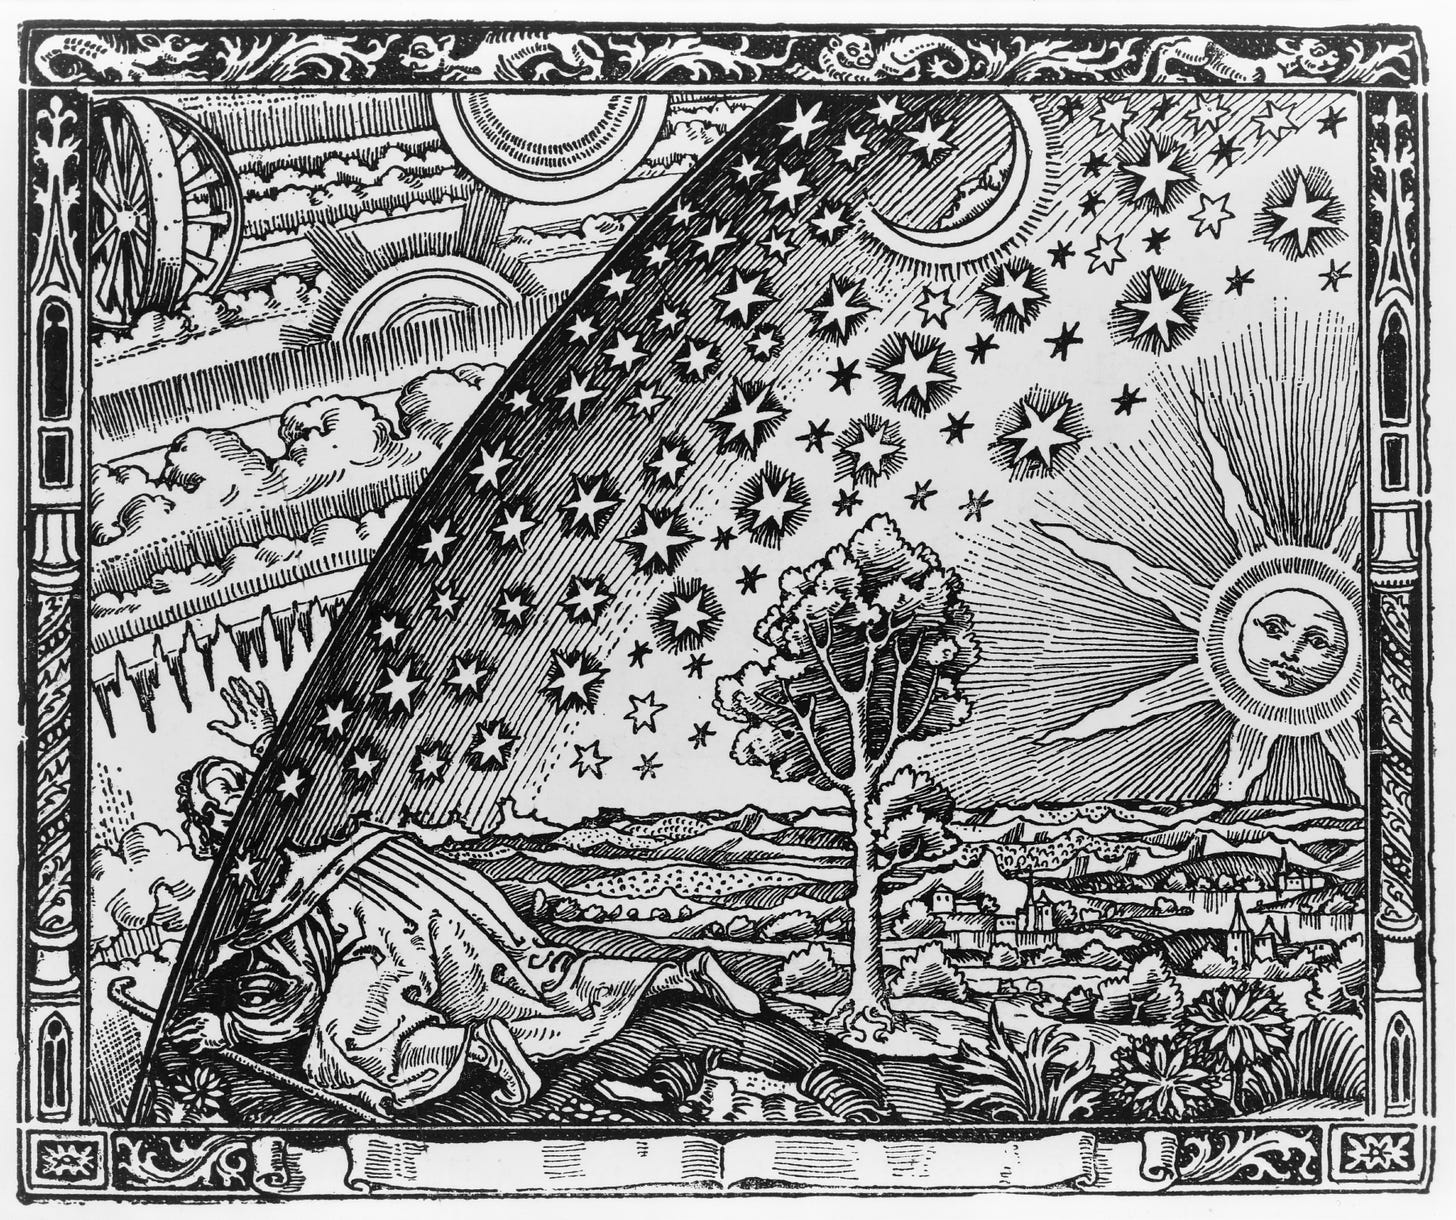 Flammarion engraving - Wikipedia